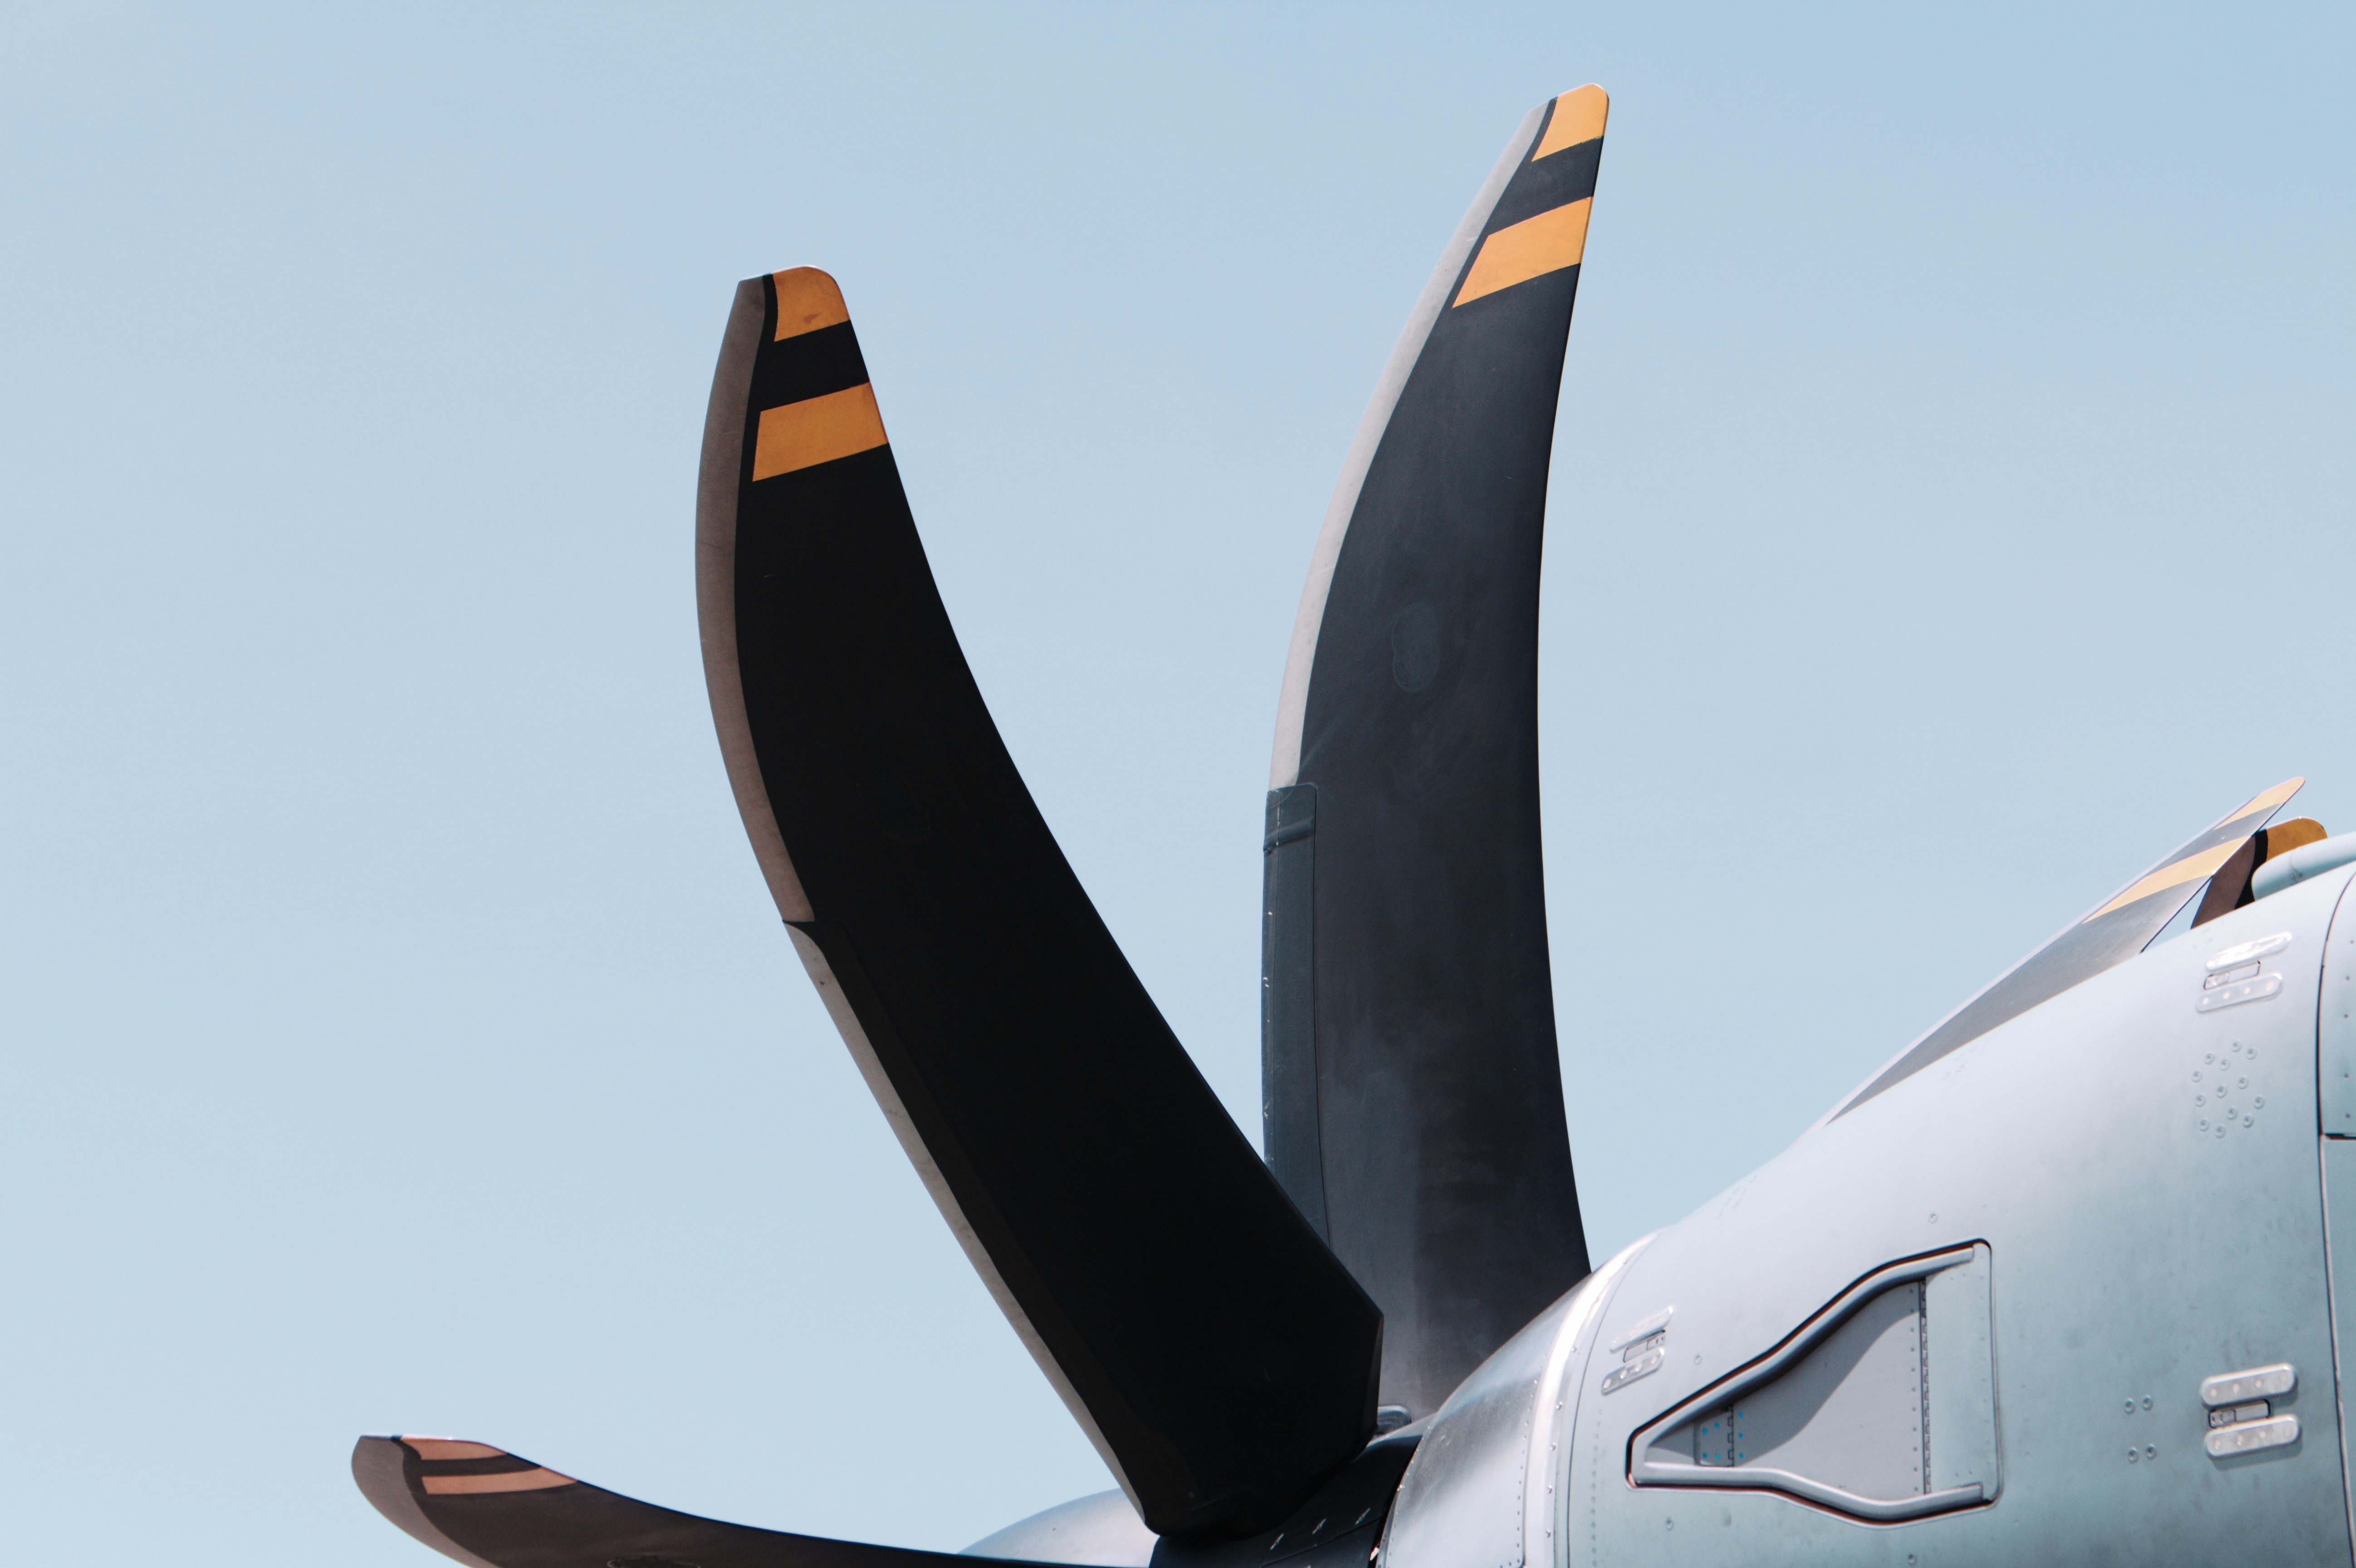 C130 Hercules propeller blade at the Singapore Airshow.